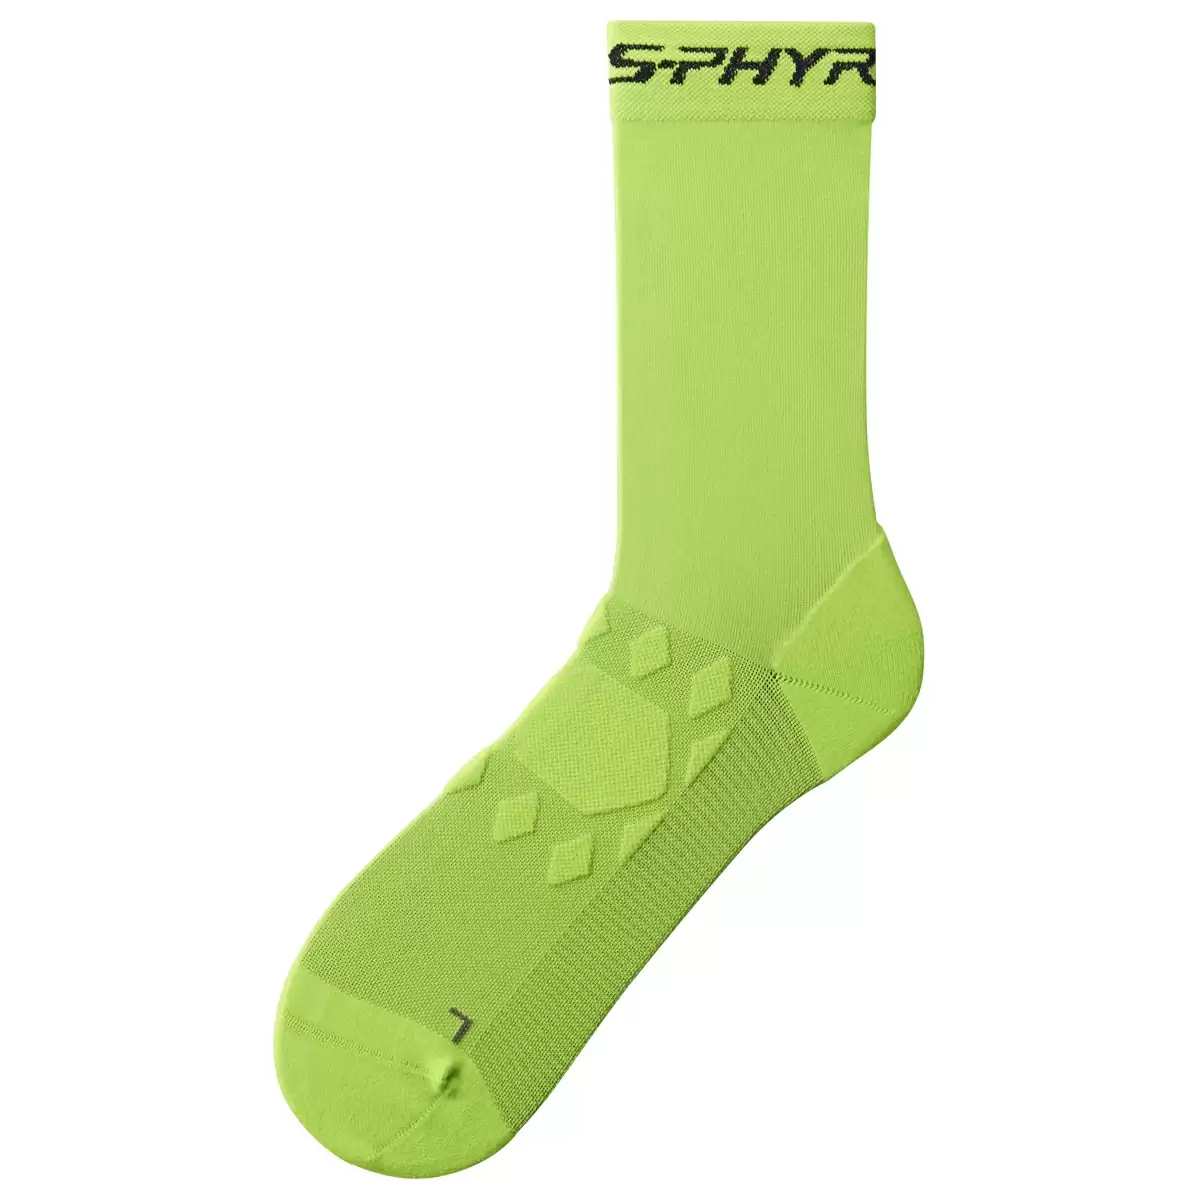 S-Phyre hohe Socken Größe XL (46-48) grün - image